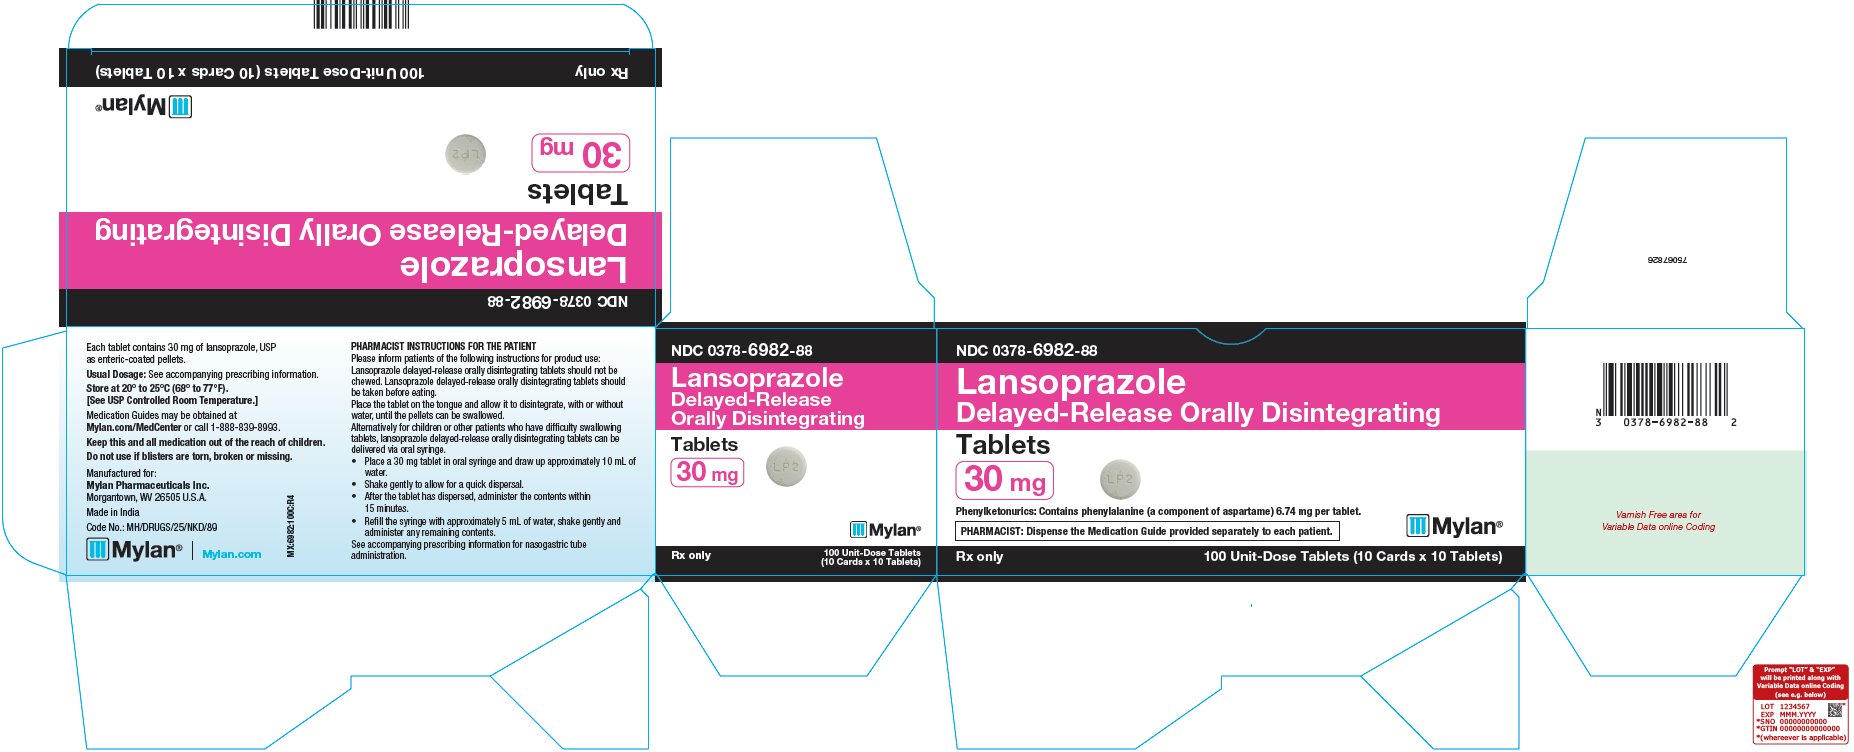 Lansoprazole Delayed-Release Orally Disintegrating Tablets 30 mg Carton Label